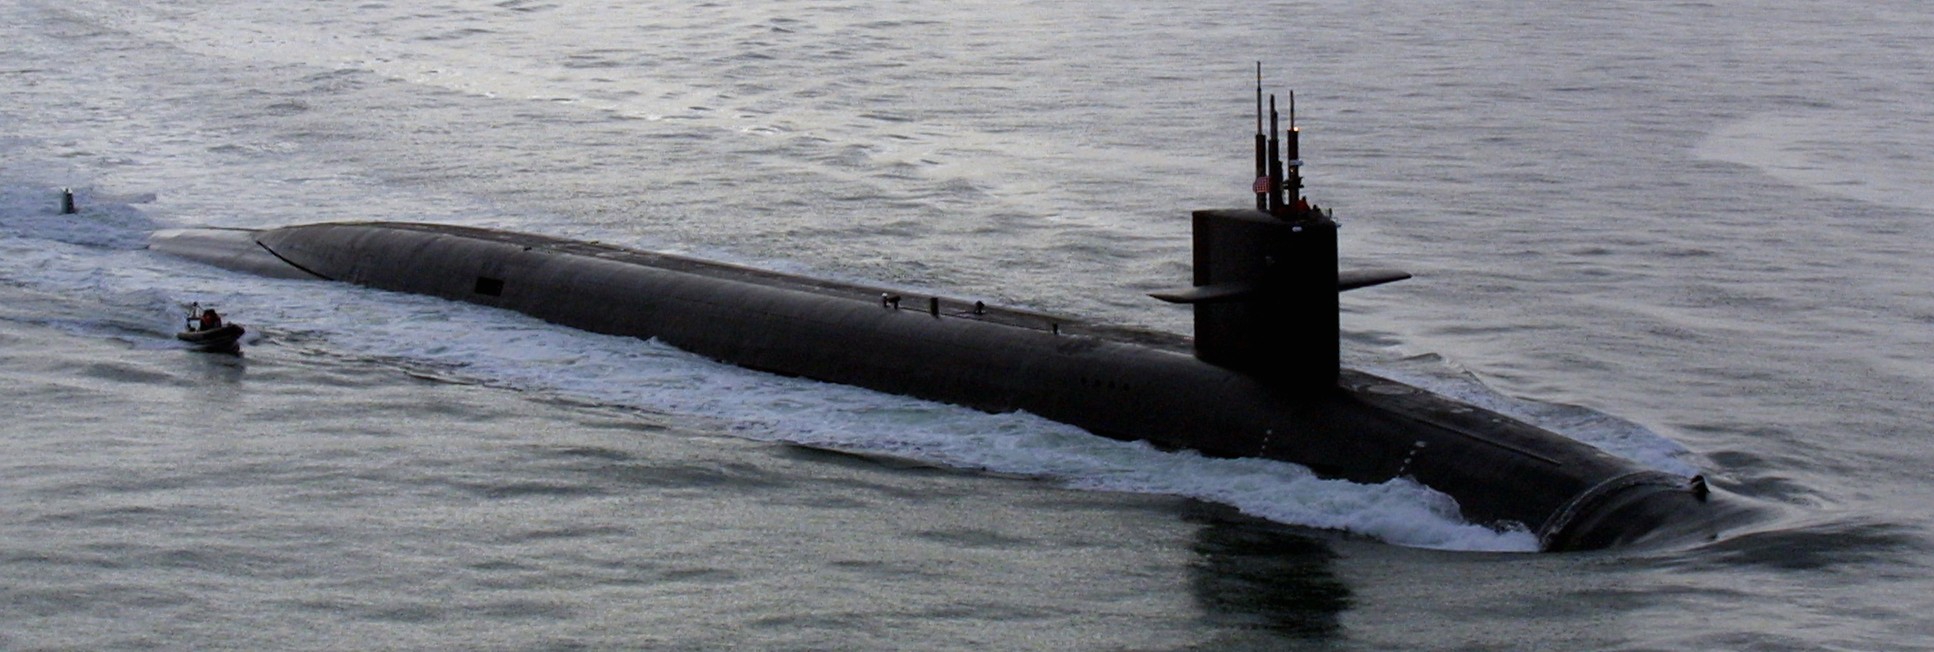 ssbn-728 uss florida ballistic missile submarine us navy 2002 55